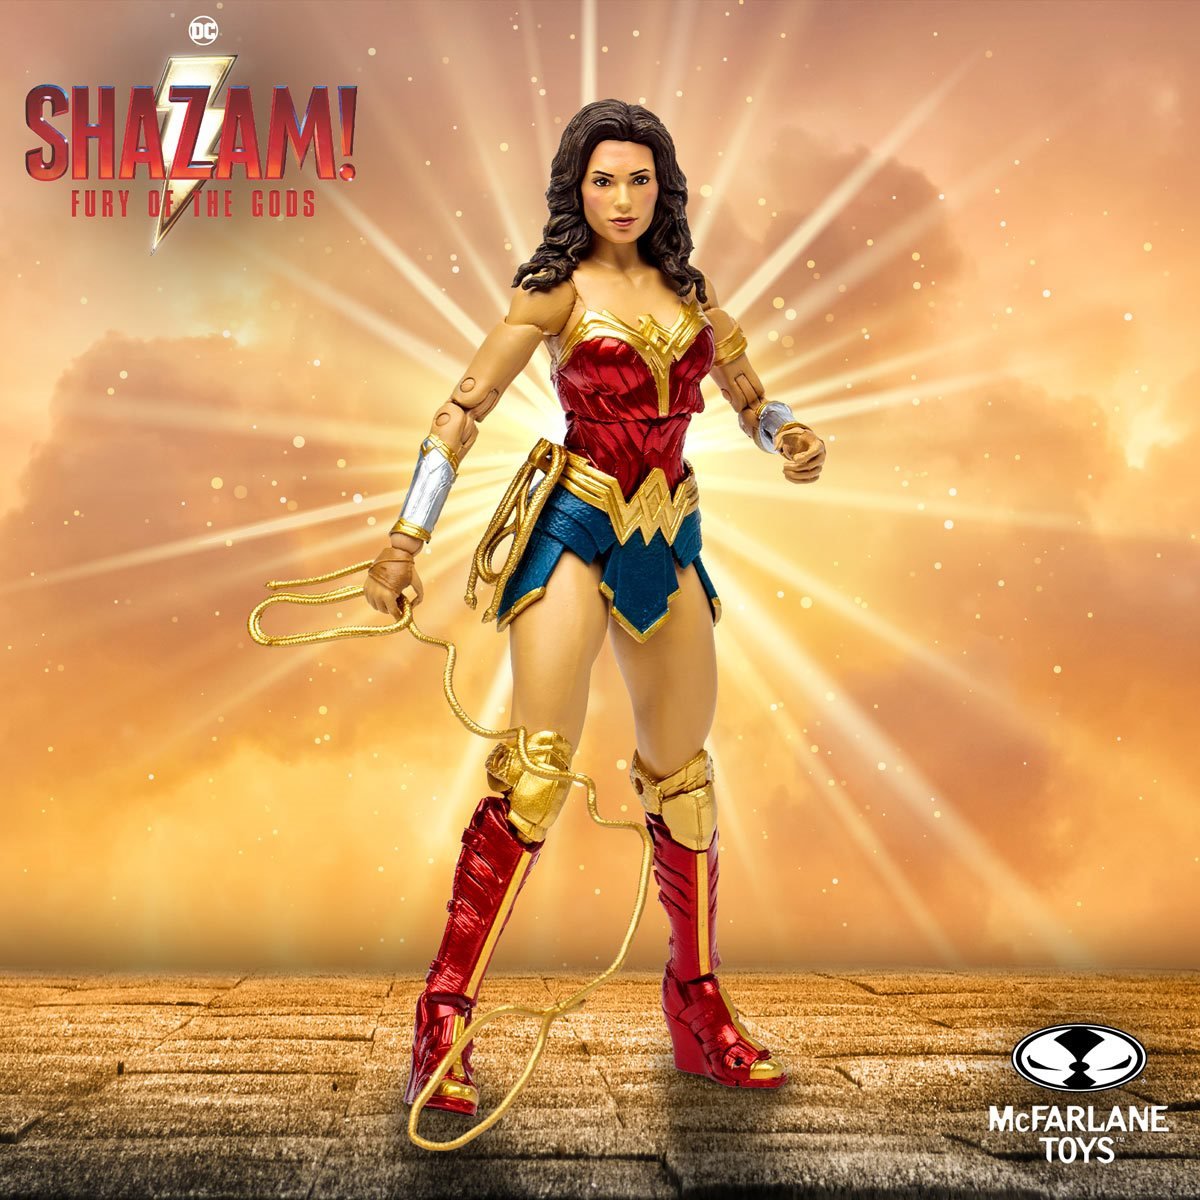 McFarlane Toys on X: Wonder Woman™ from Shazam! Fury of the Gods